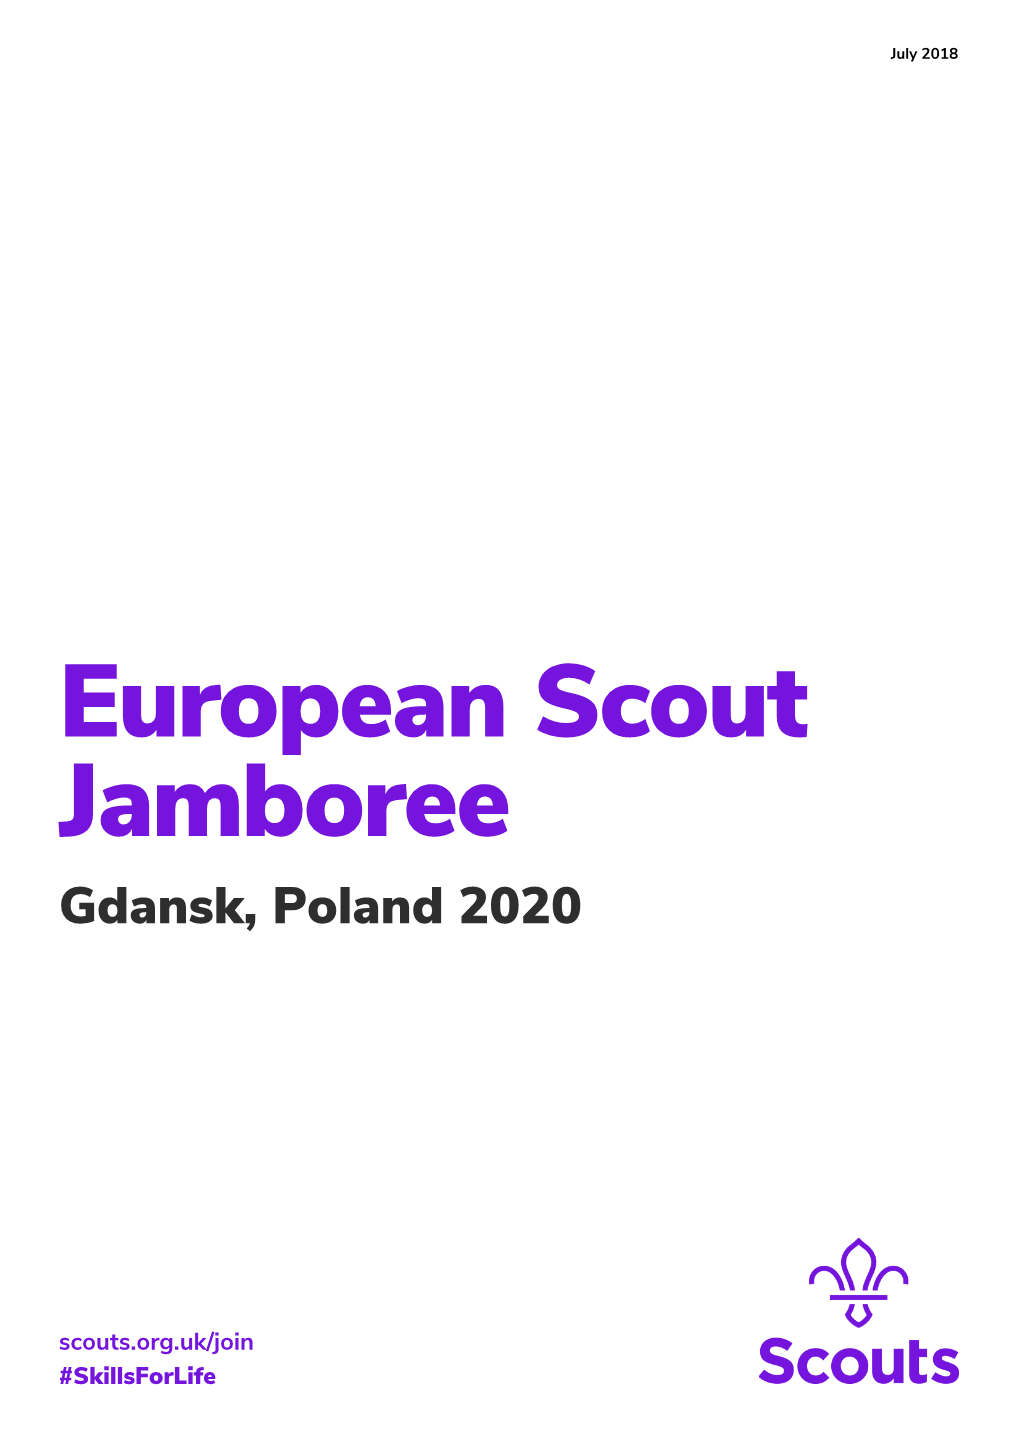 European Scout Jamboree Gdansk, Poland 2020